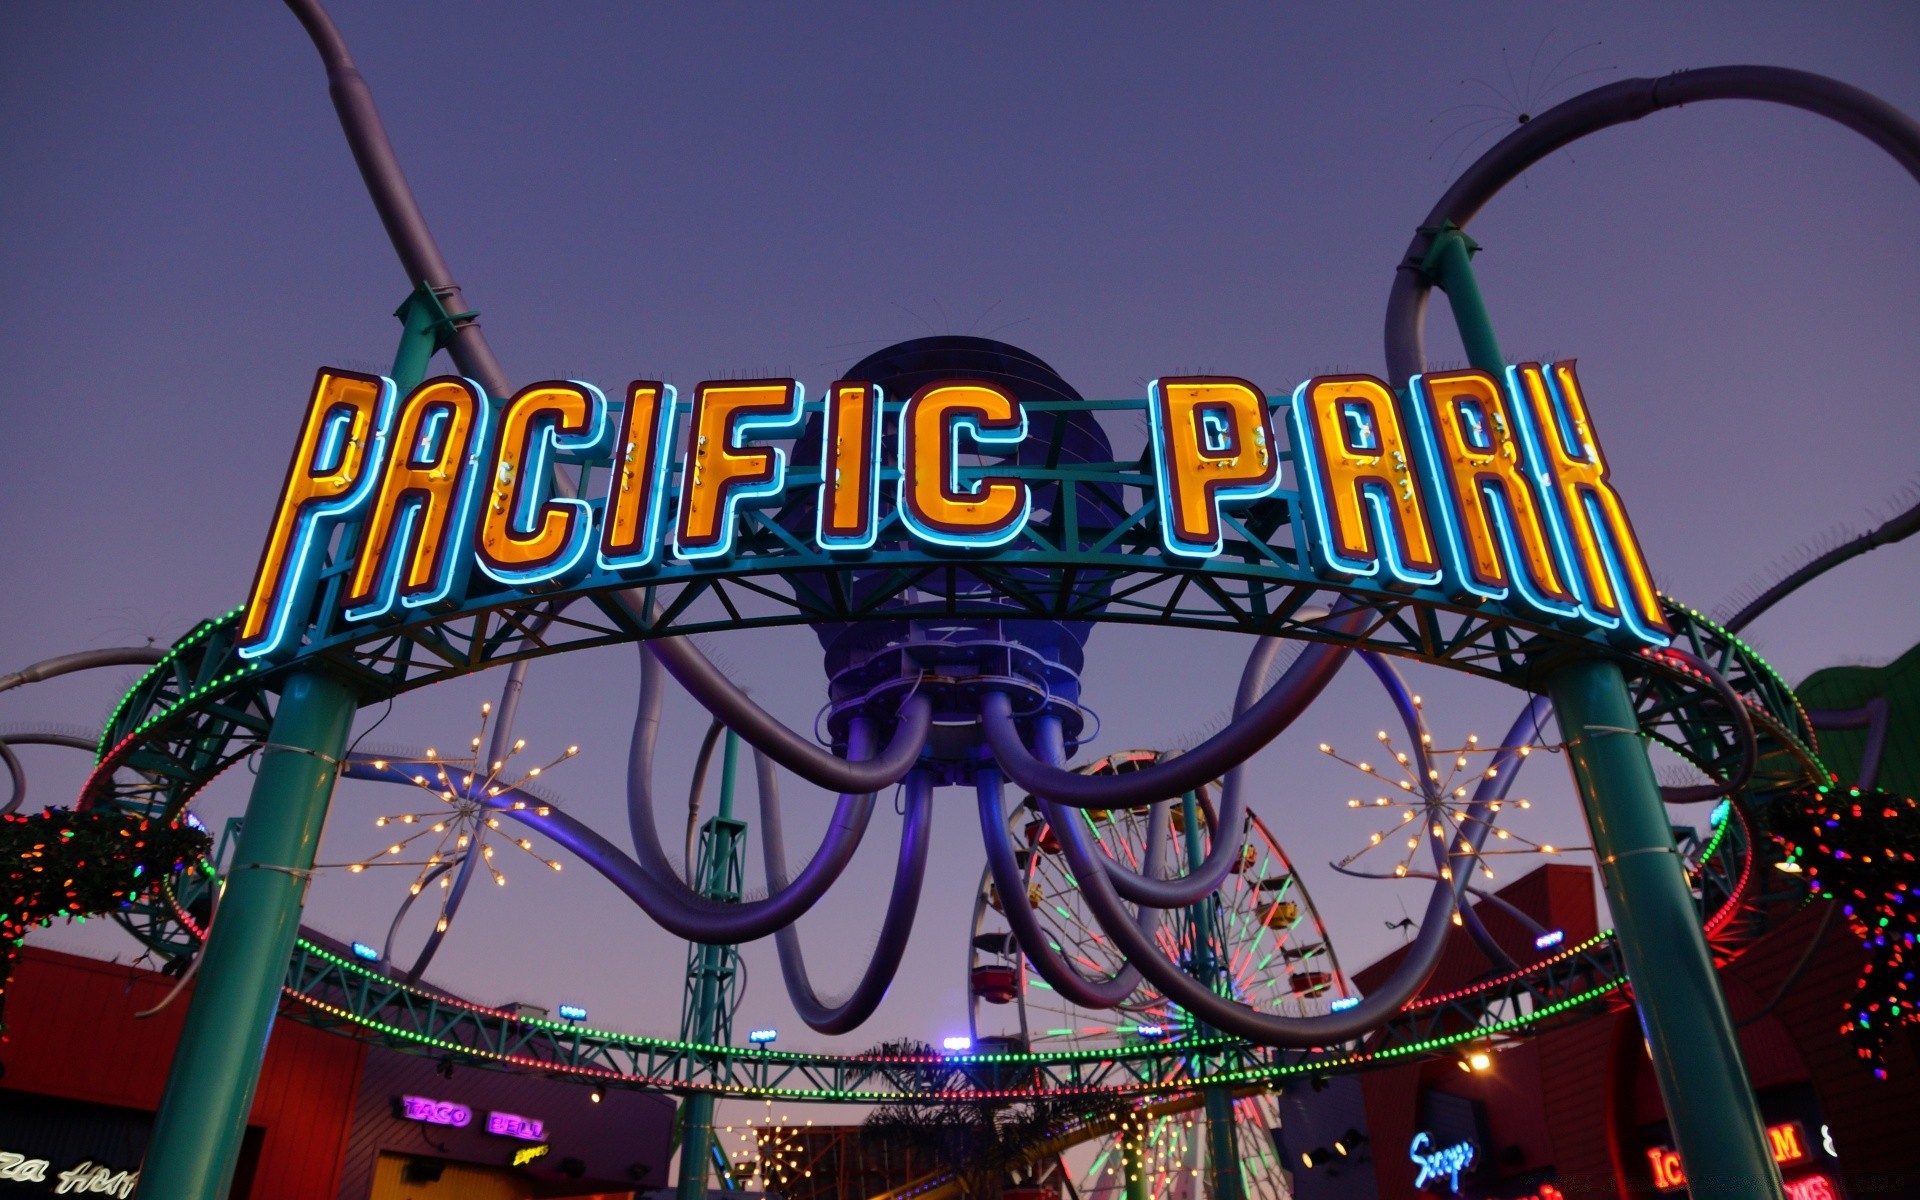 america entertainment carnival carousel fun exhilaration theme neon ferris wheel fairground circus gambling festival casino coaster nightlife sky outdoors park design